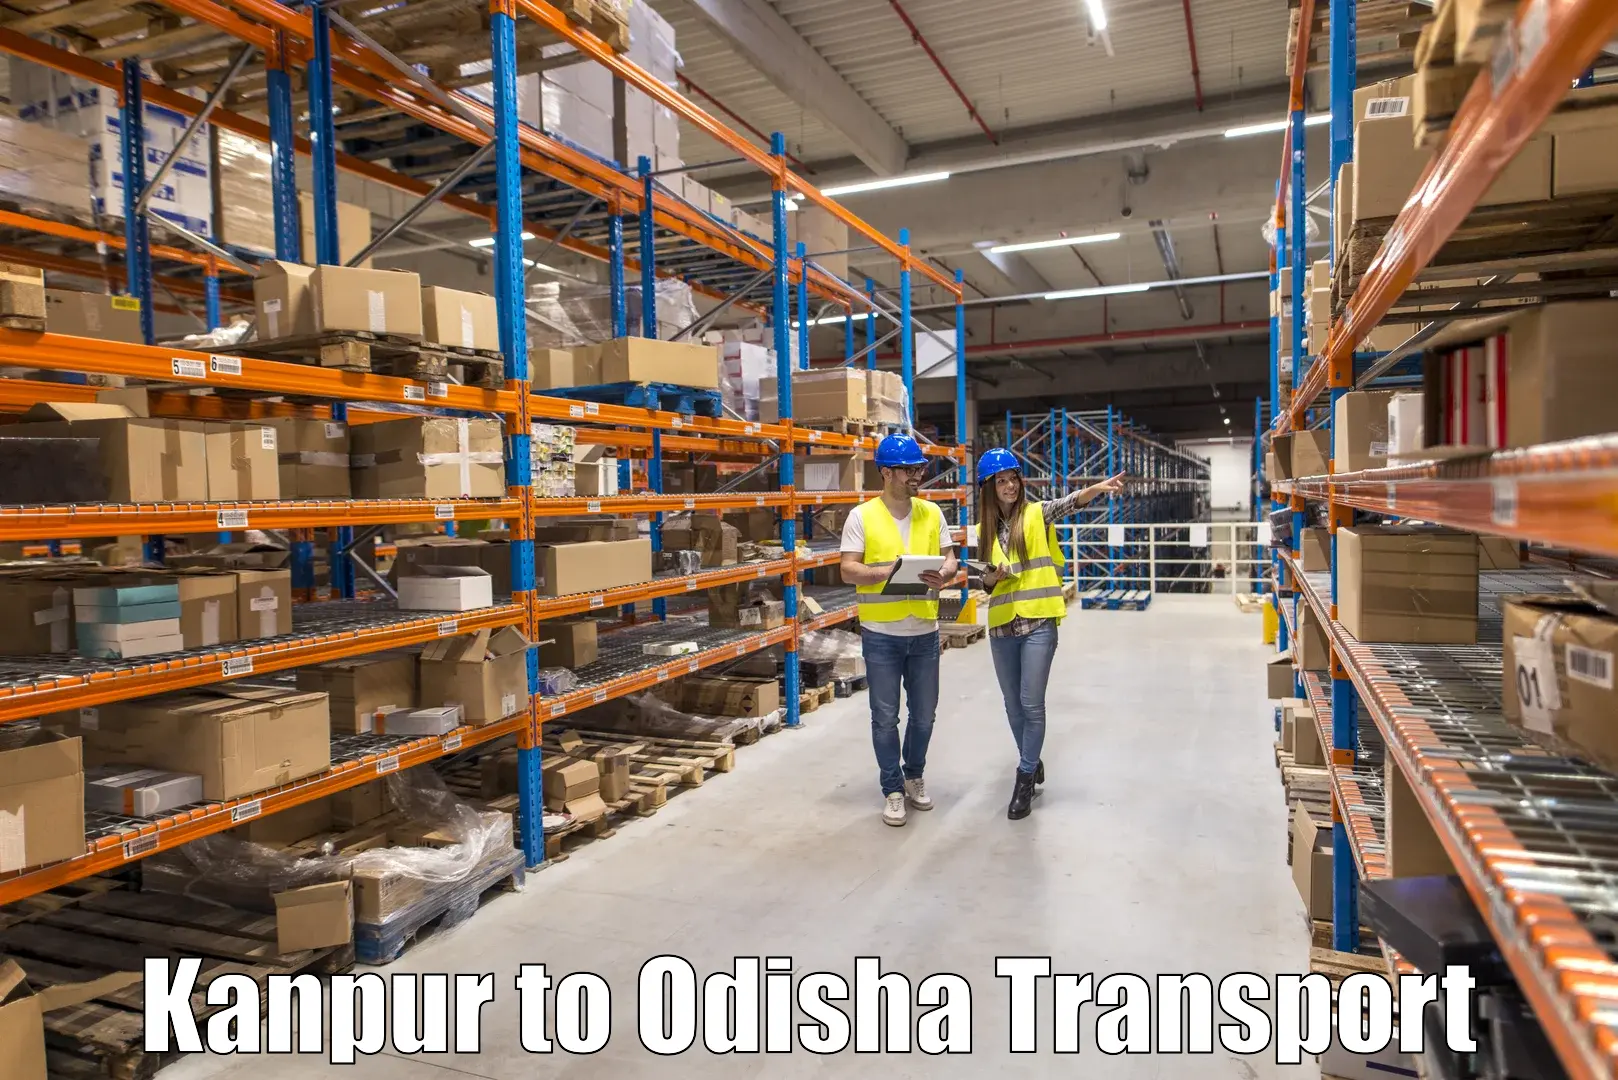 Cycle transportation service Kanpur to Odisha